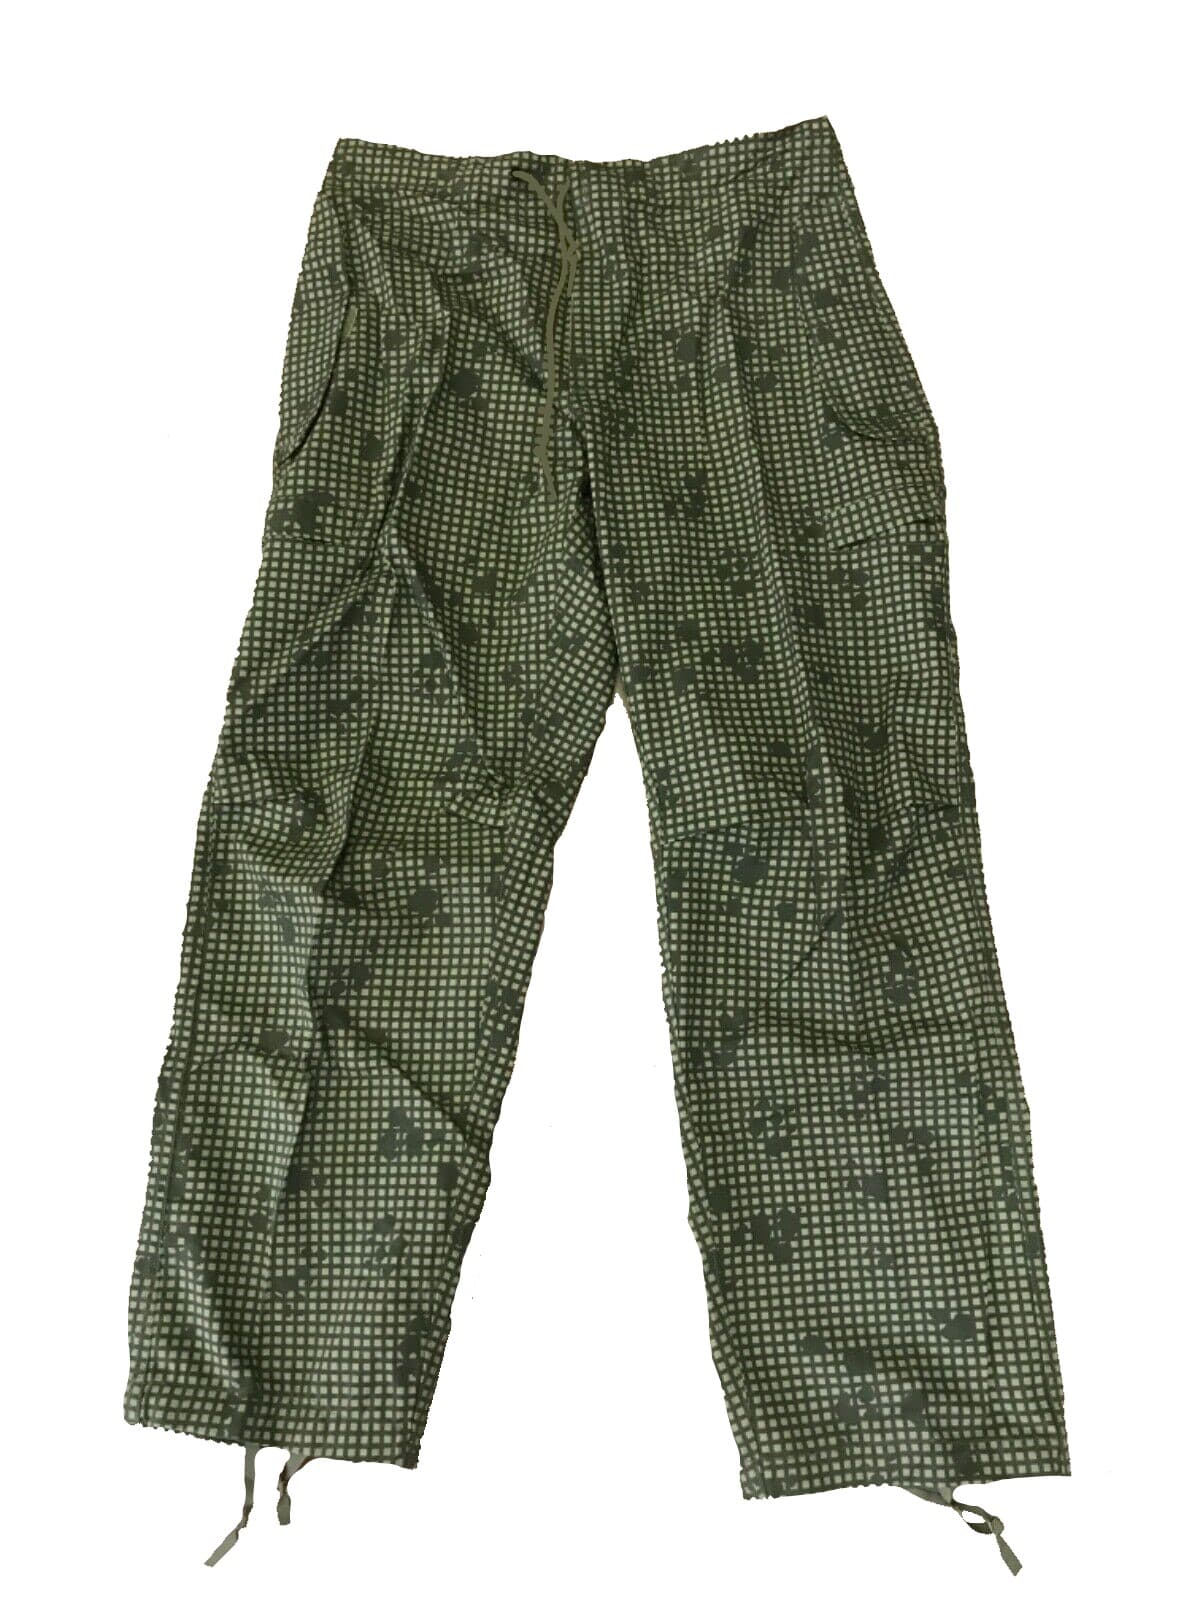 US GI Desert Camo Trousers Camouflage BDU Pants Ripstop